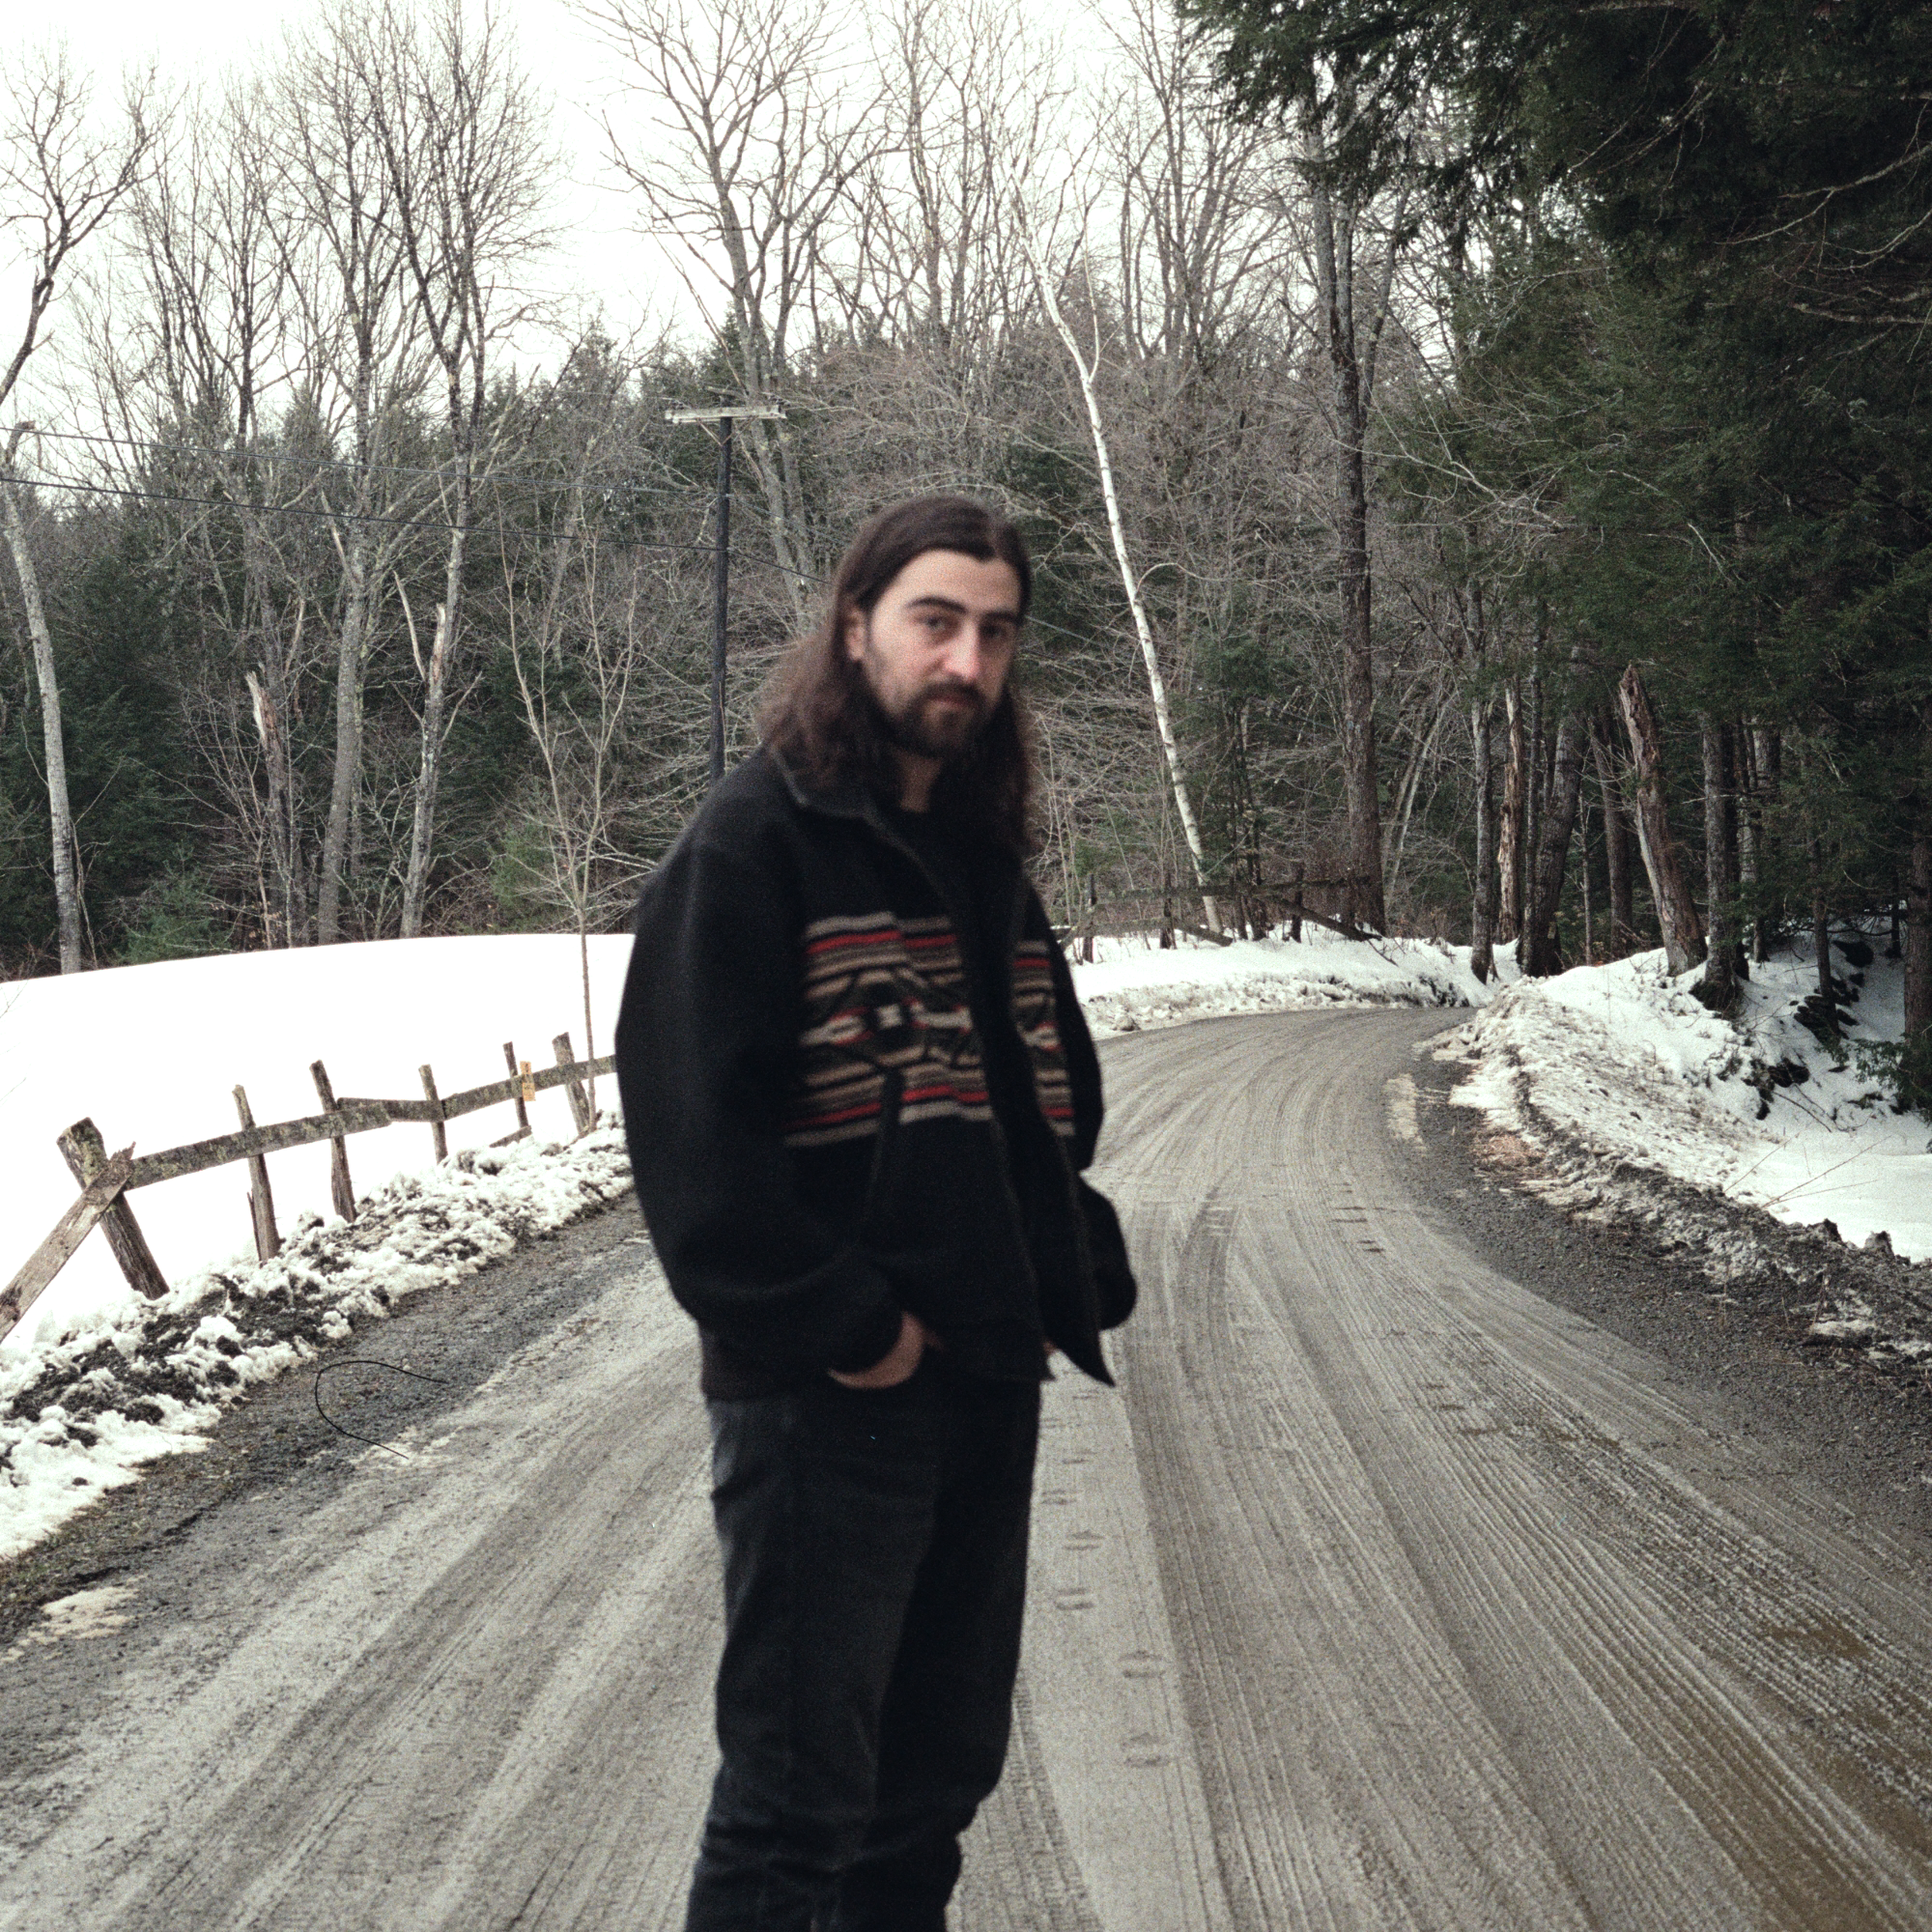 Interview w/ Vermont Based Singer-Songwriter Noah Kahan